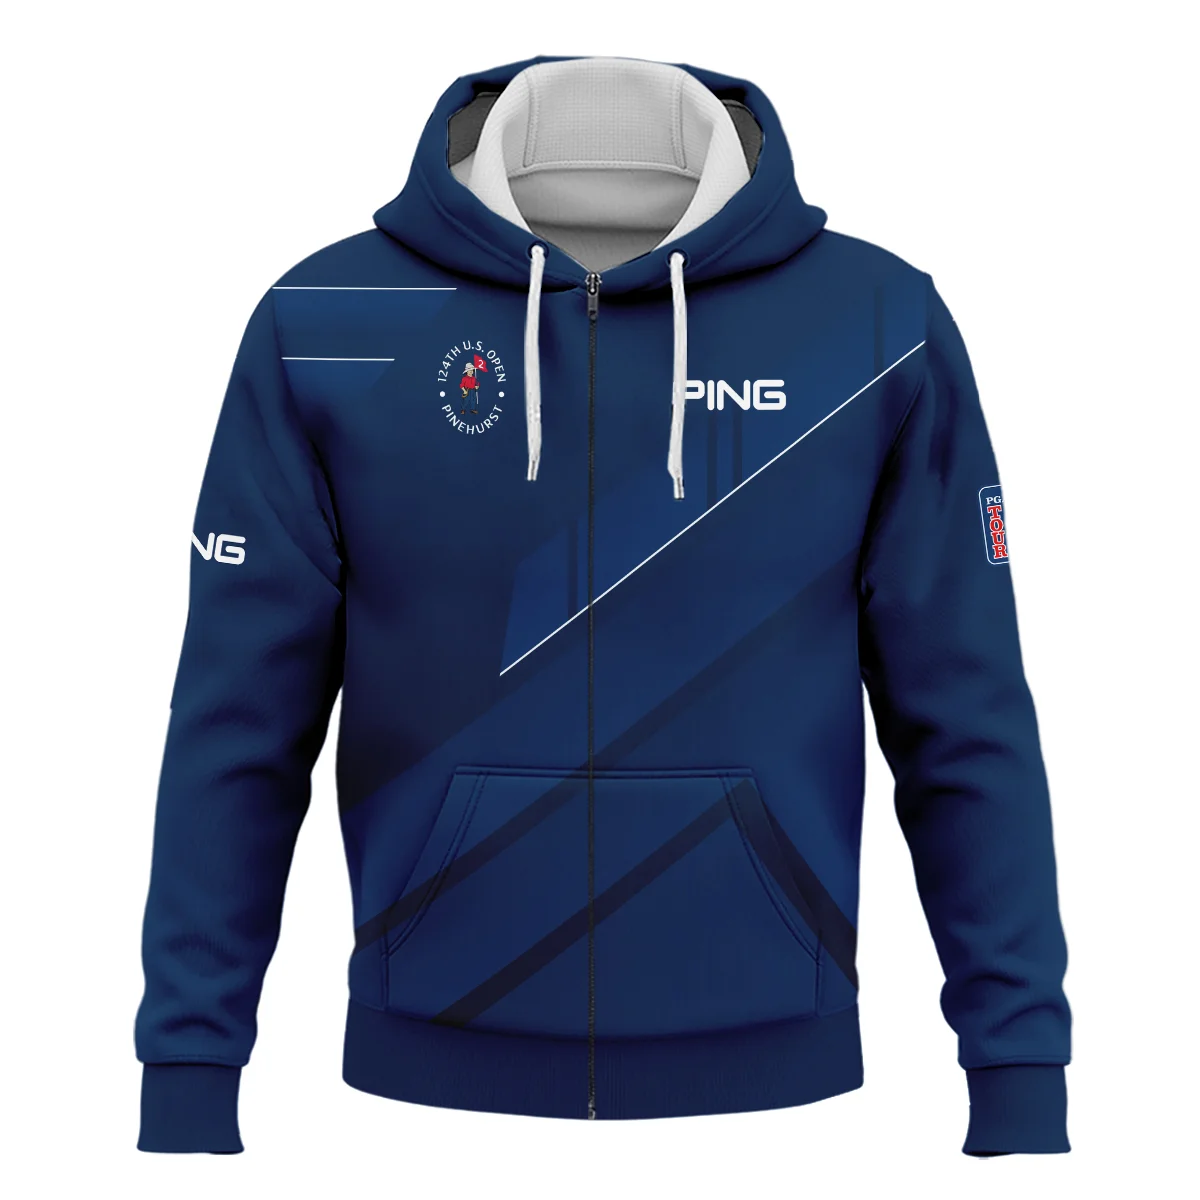 Ping 124th U.S. Open Pinehurst Blue Gradient With White Straight Line Sleeveless Jacket Style Classic Sleeveless Jacket